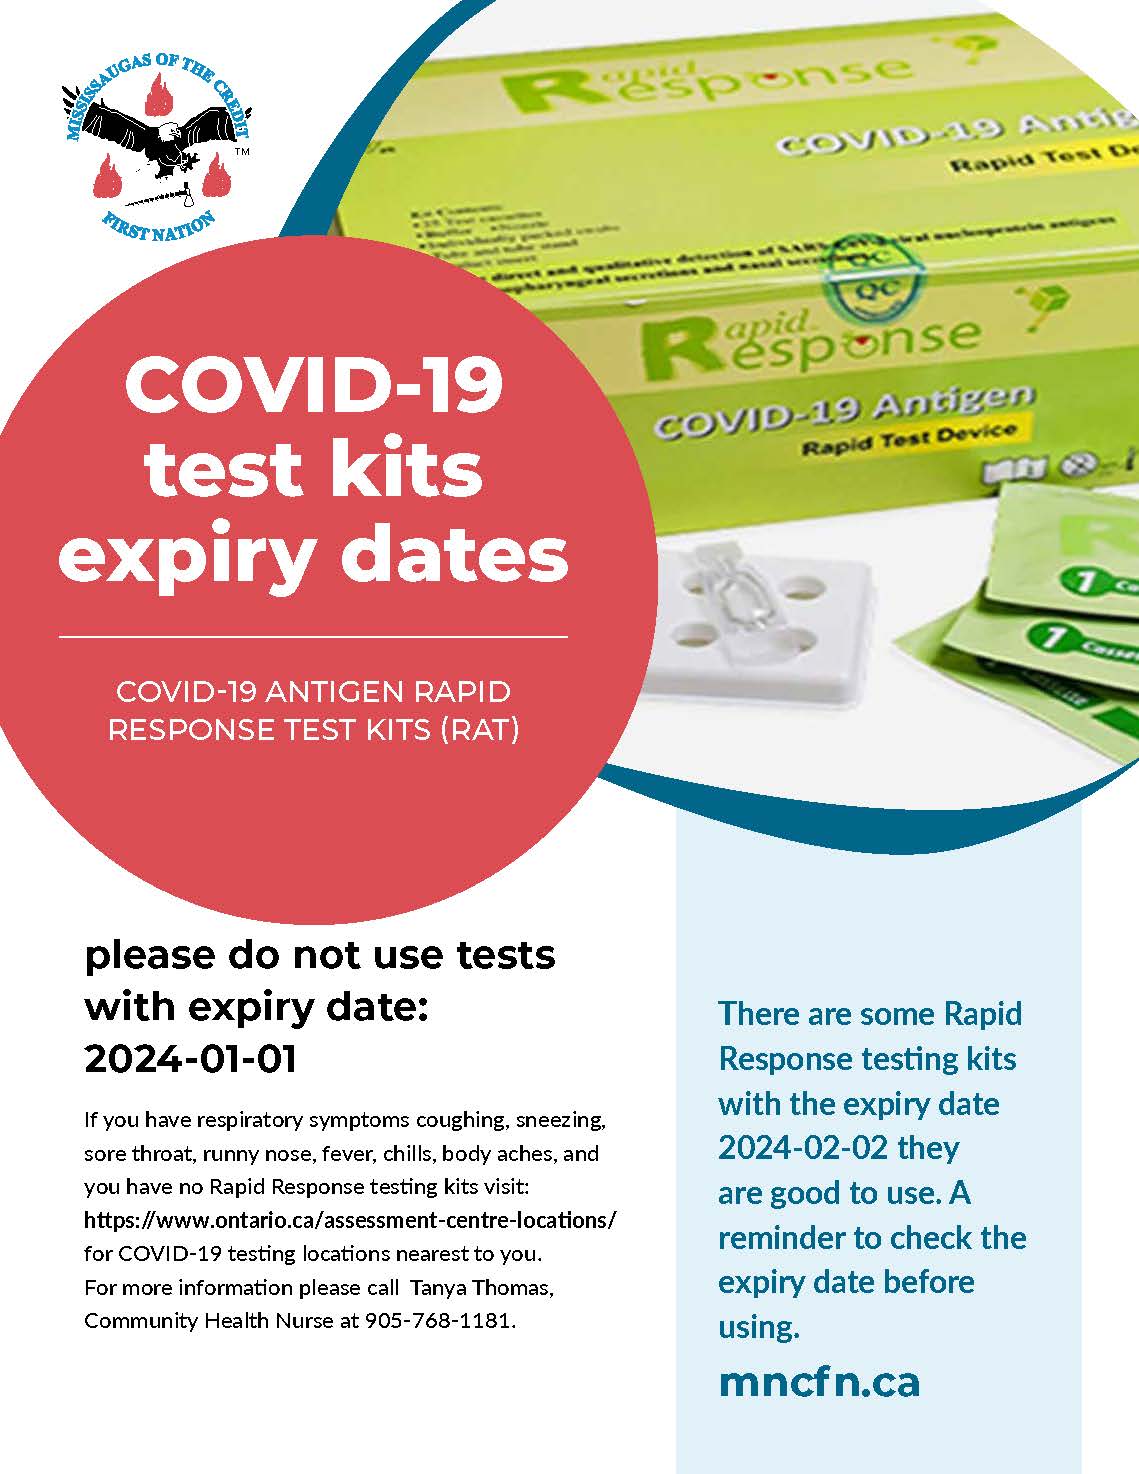 COVID-19 test kit expiry dates